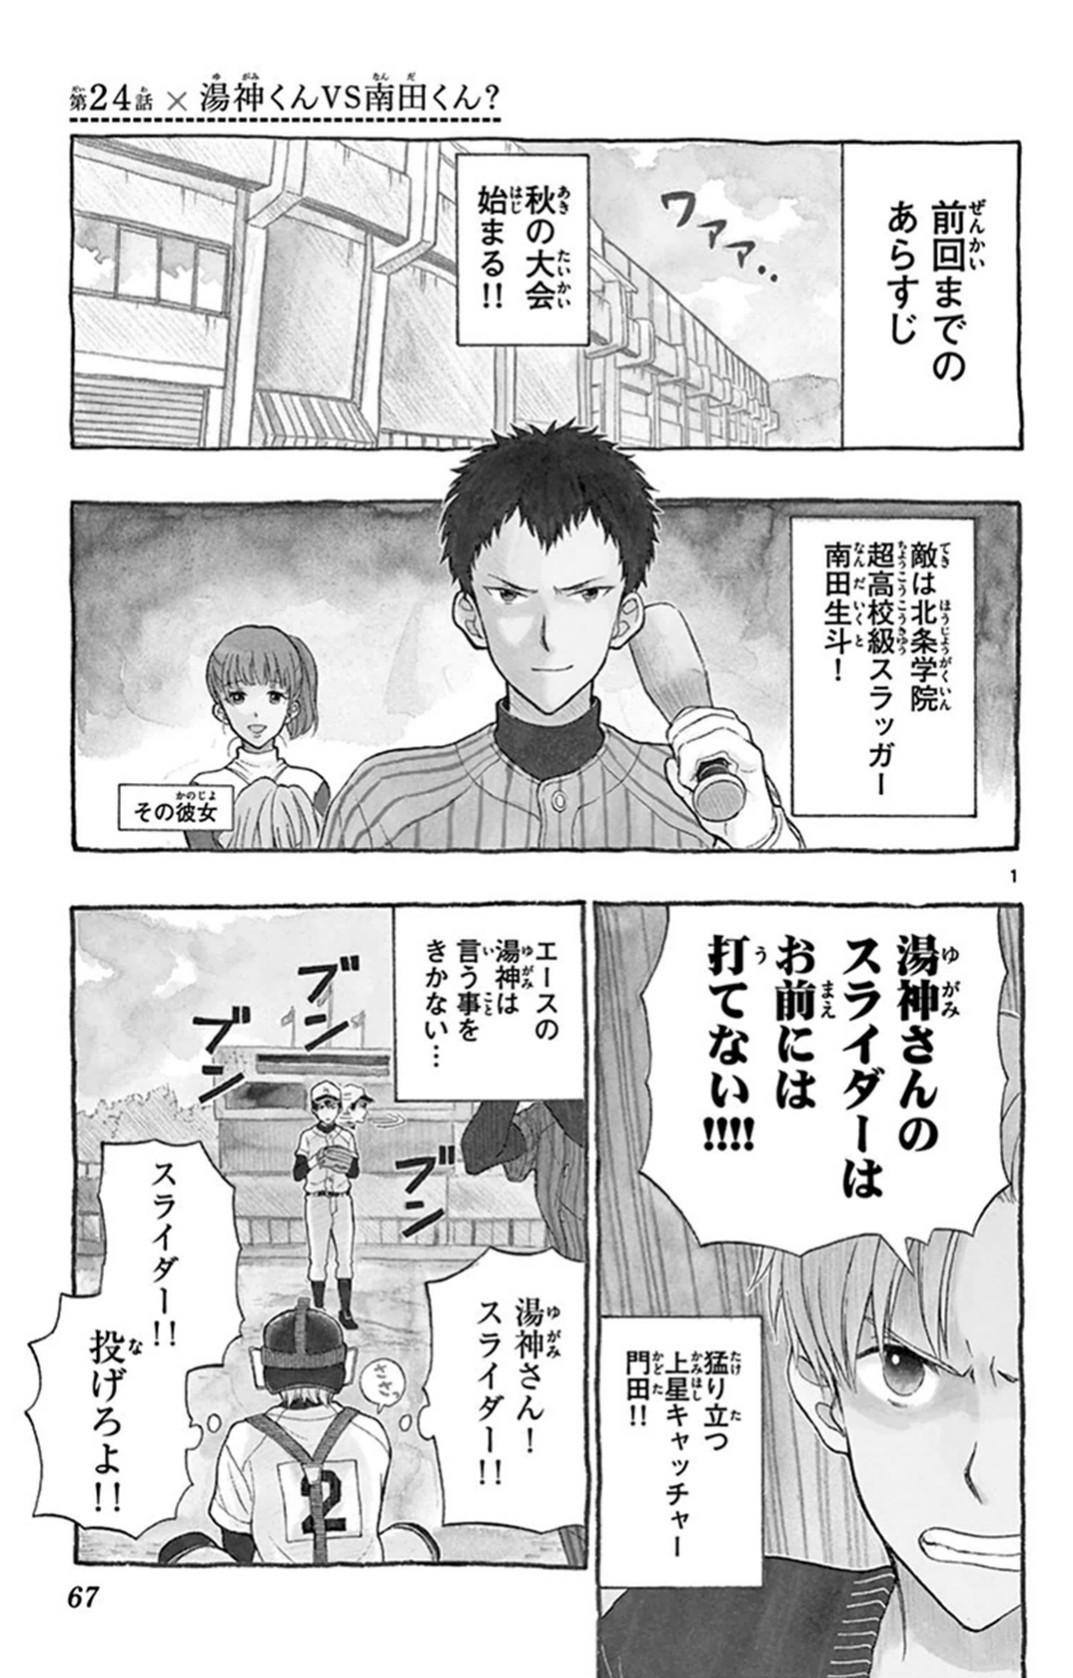 Yugami-kun ni wa Tomodachi ga Inai - Chapter 024 - Page 1